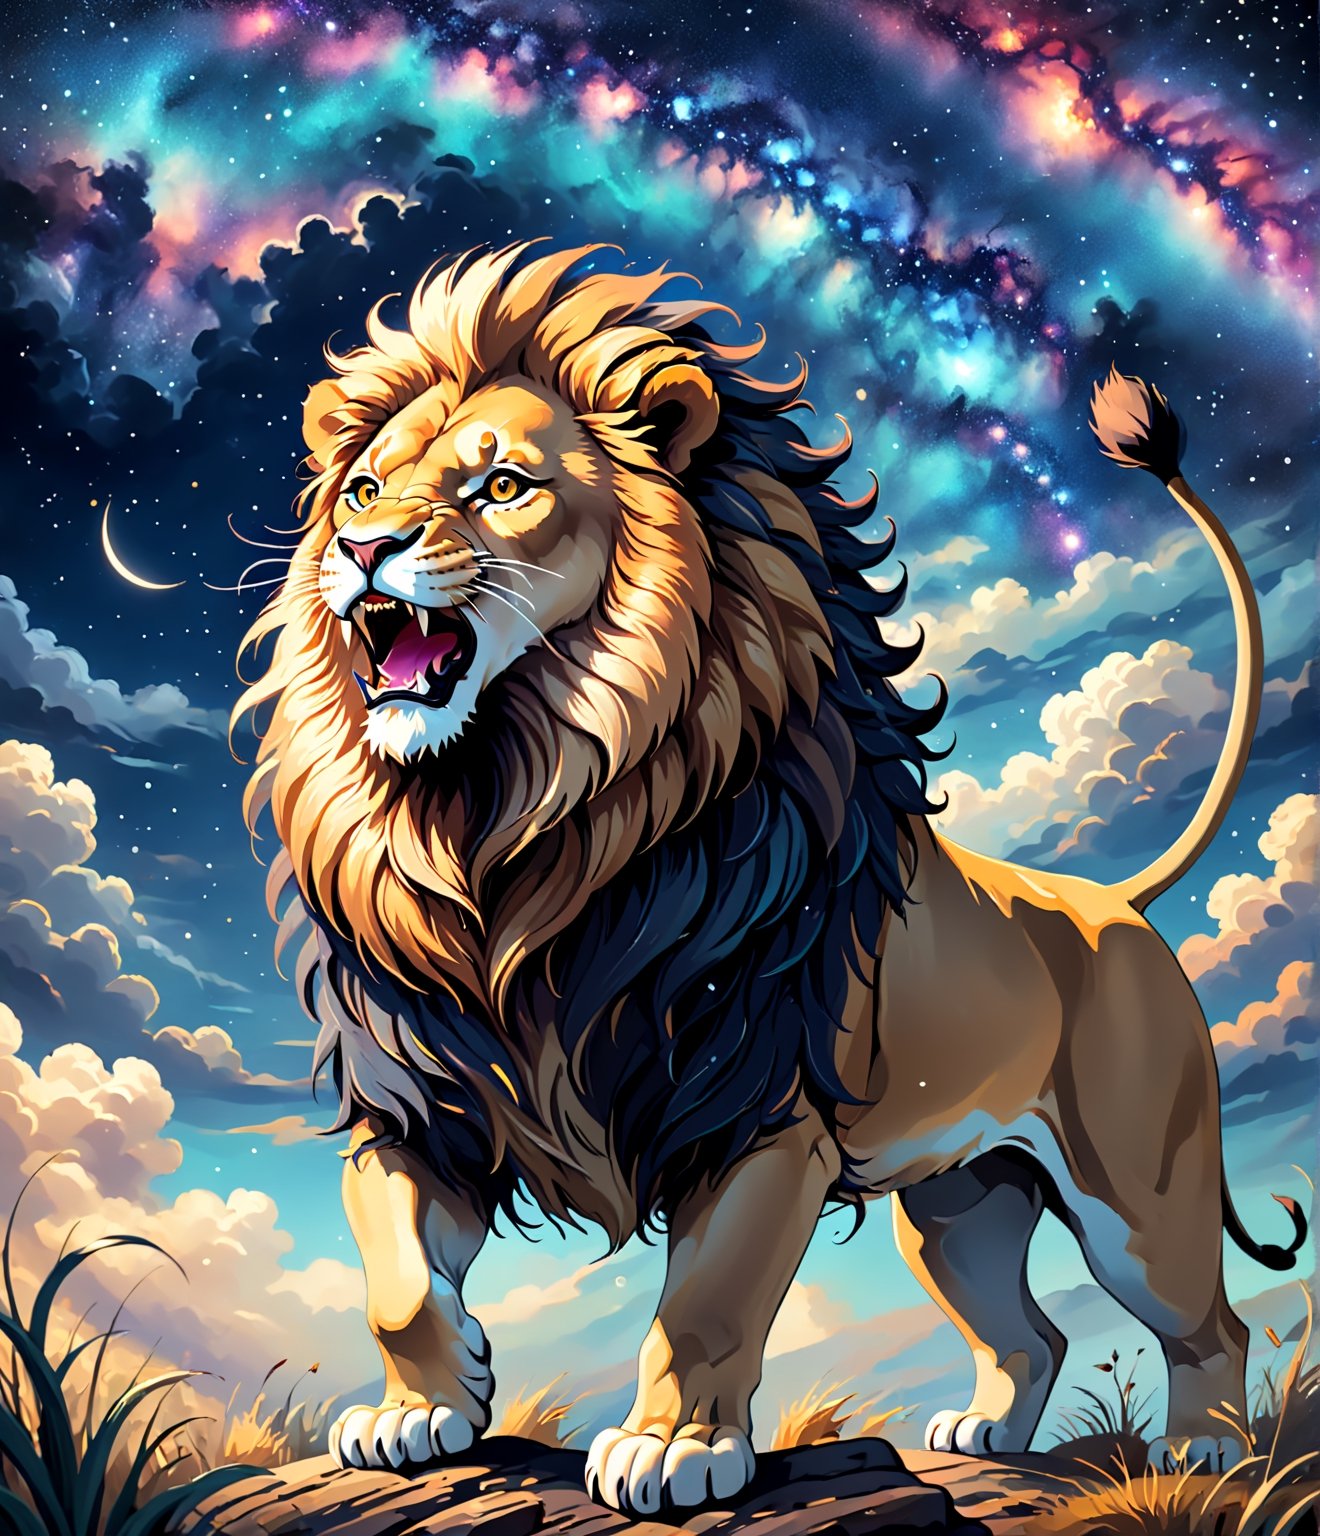 Masterpiece, 4K, ultra detailed,1 majestic lion in safari roaring, epic night sky, more detail XL, SFW, depth of field,Ink art, art nouveau style,